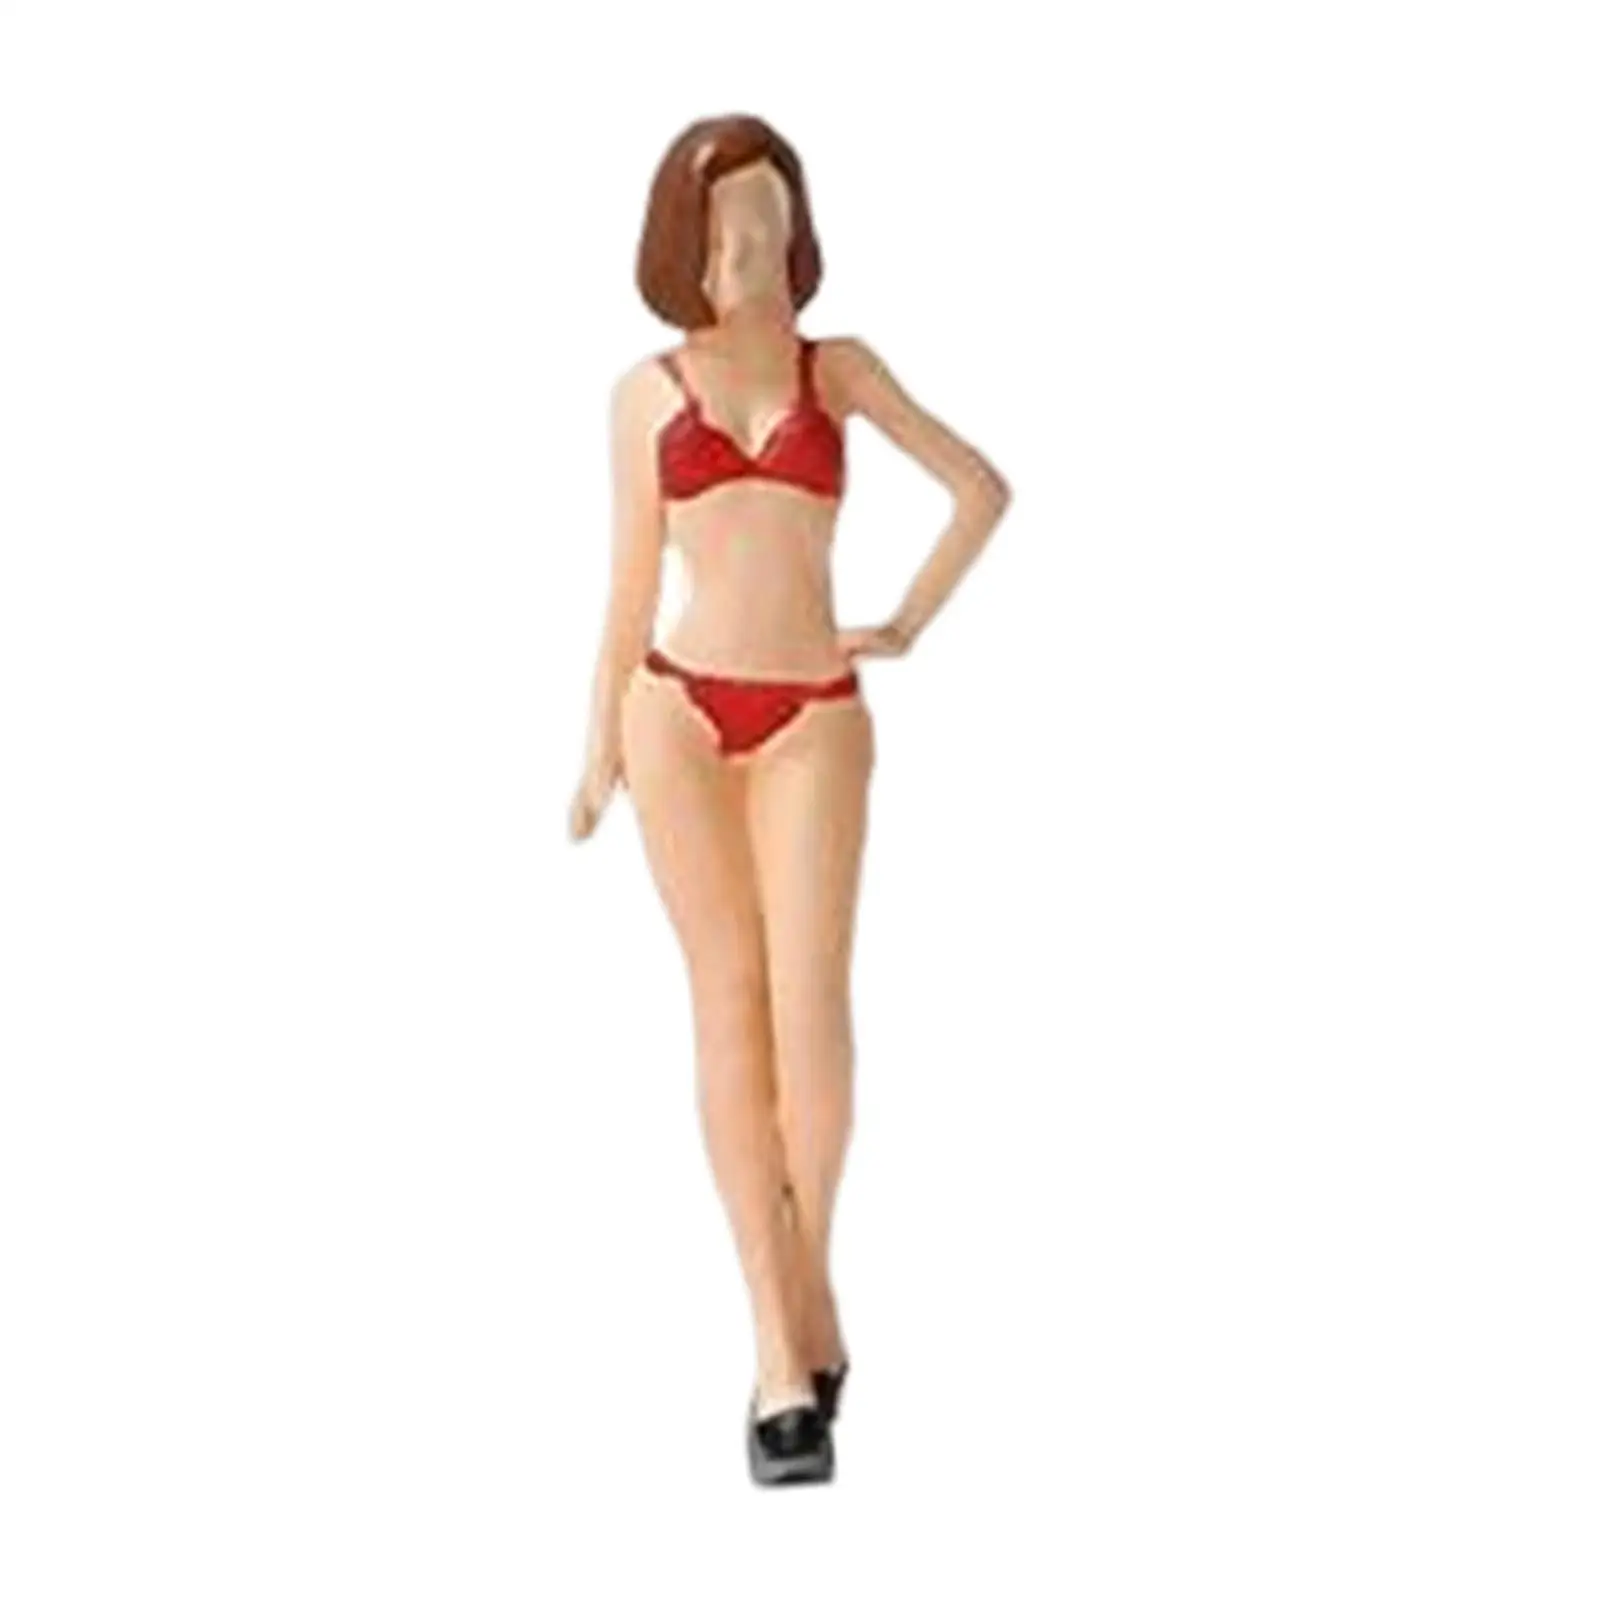 1/64 Scale People Model Role Play Figure Resin girl People Figurine for Miniature Scene Desktop Decoration Train Layout